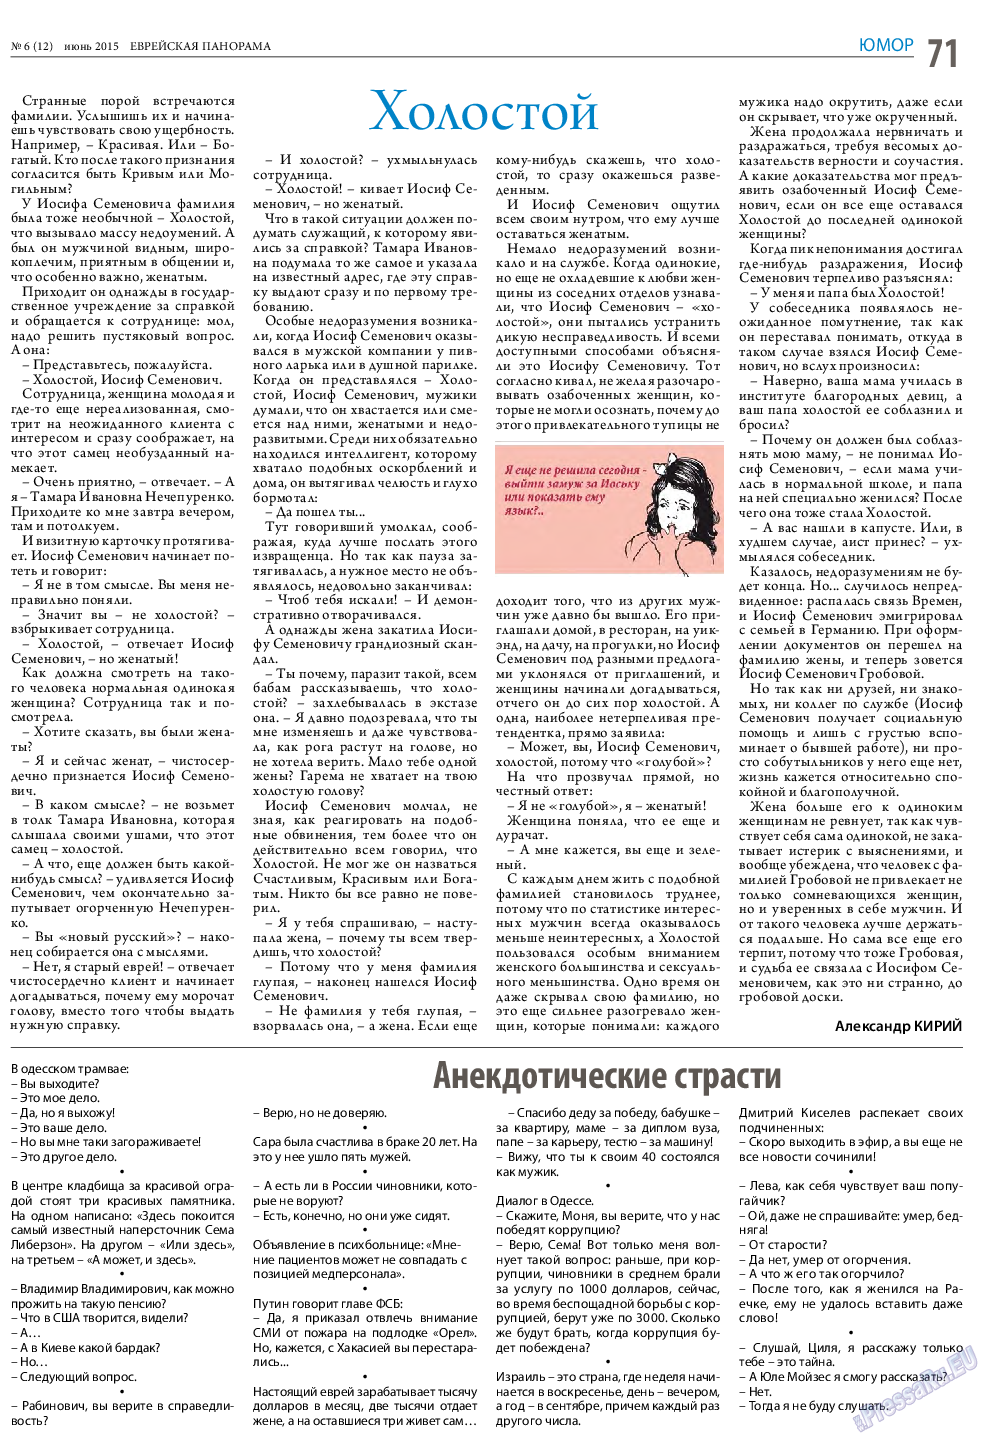 Еврейская панорама, газета. 2015 №6 стр.71